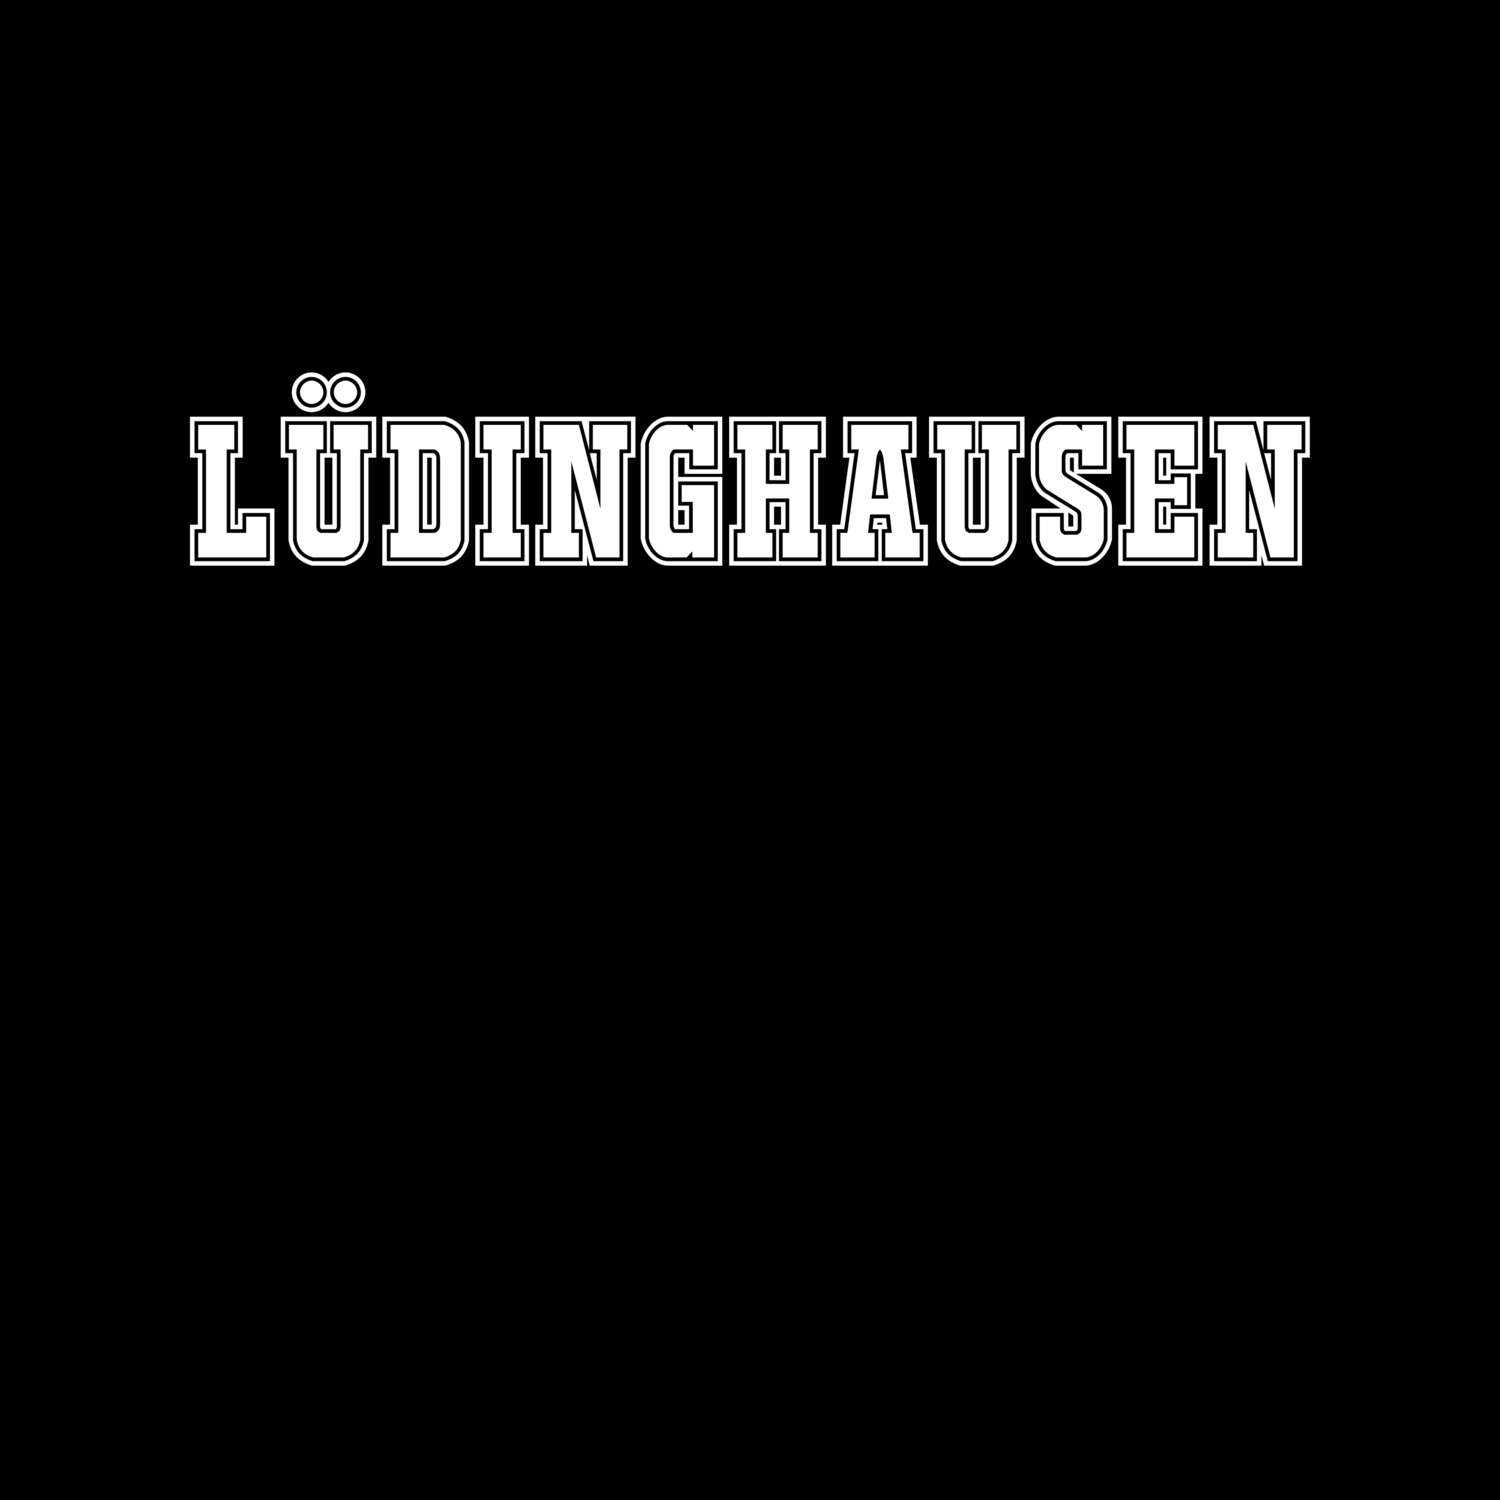 Lüdinghausen T-Shirt »Classic«